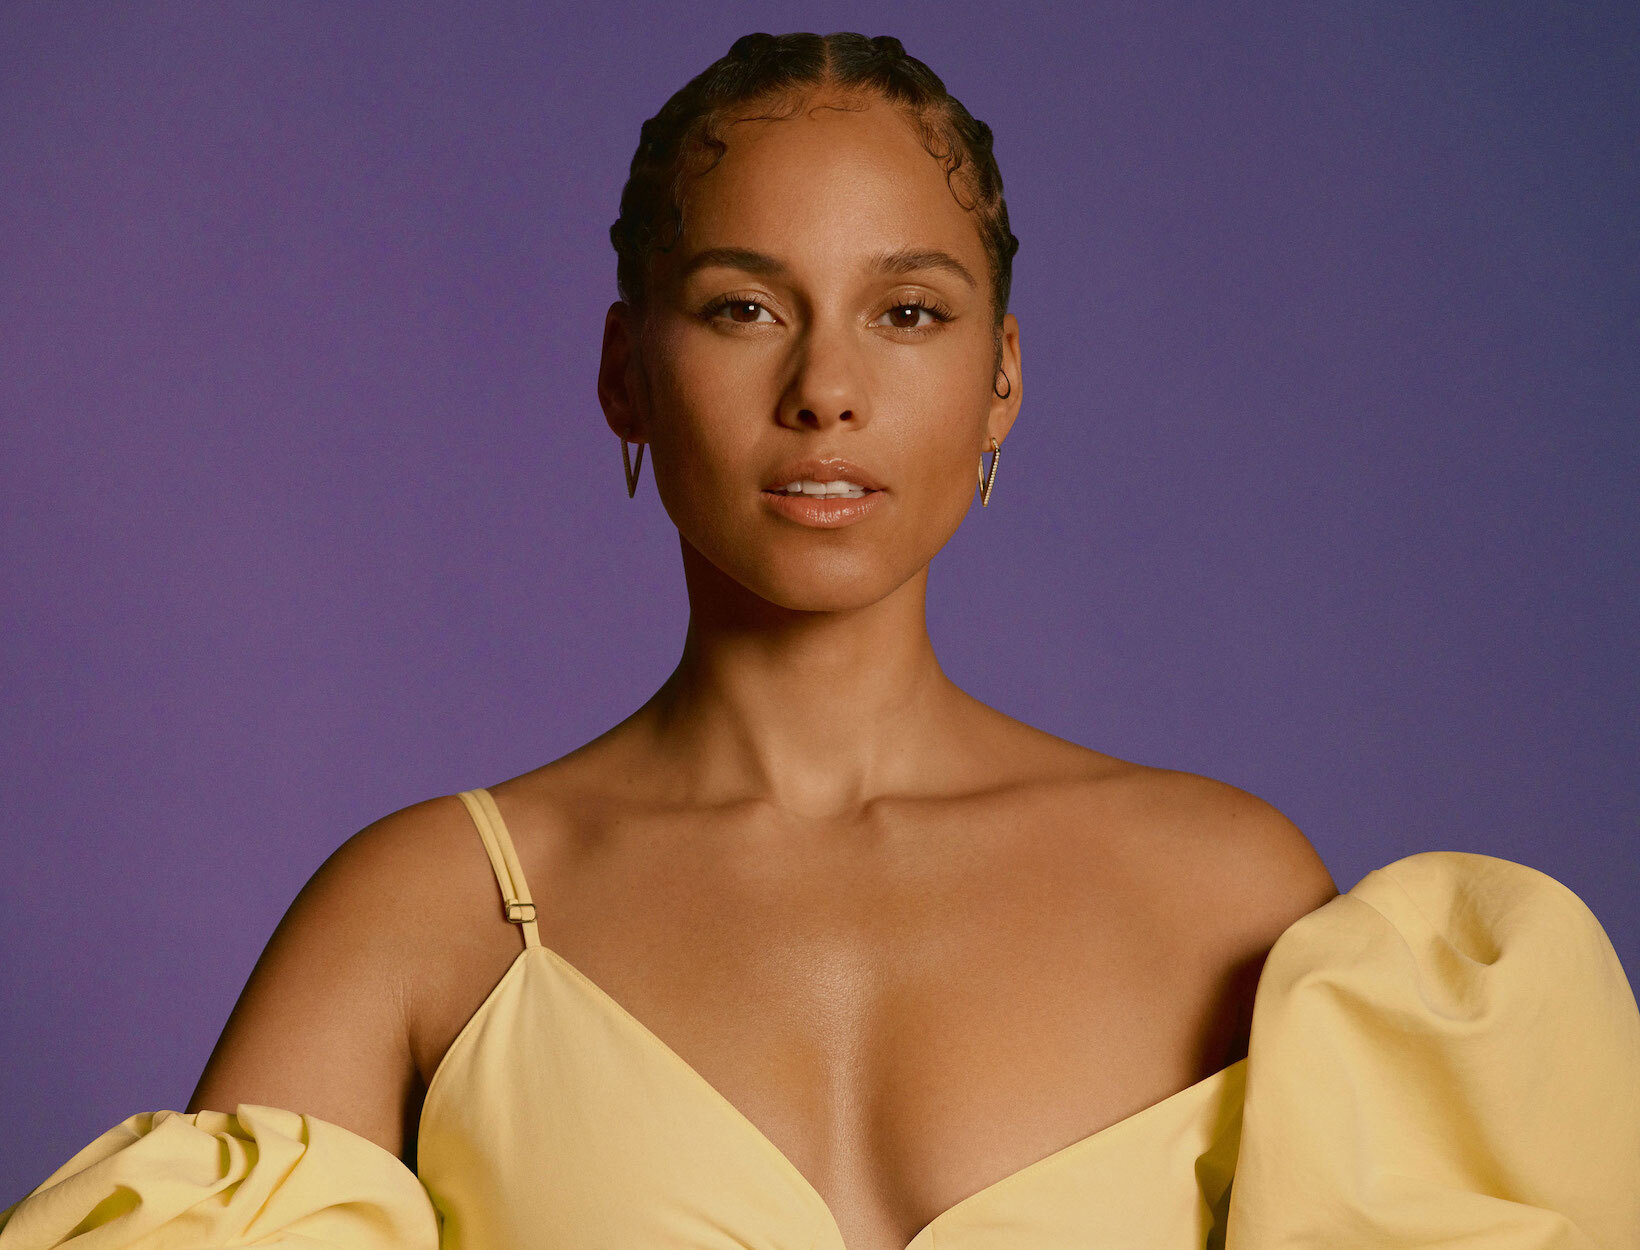 Alicia Keys blasts social media for affecting body image